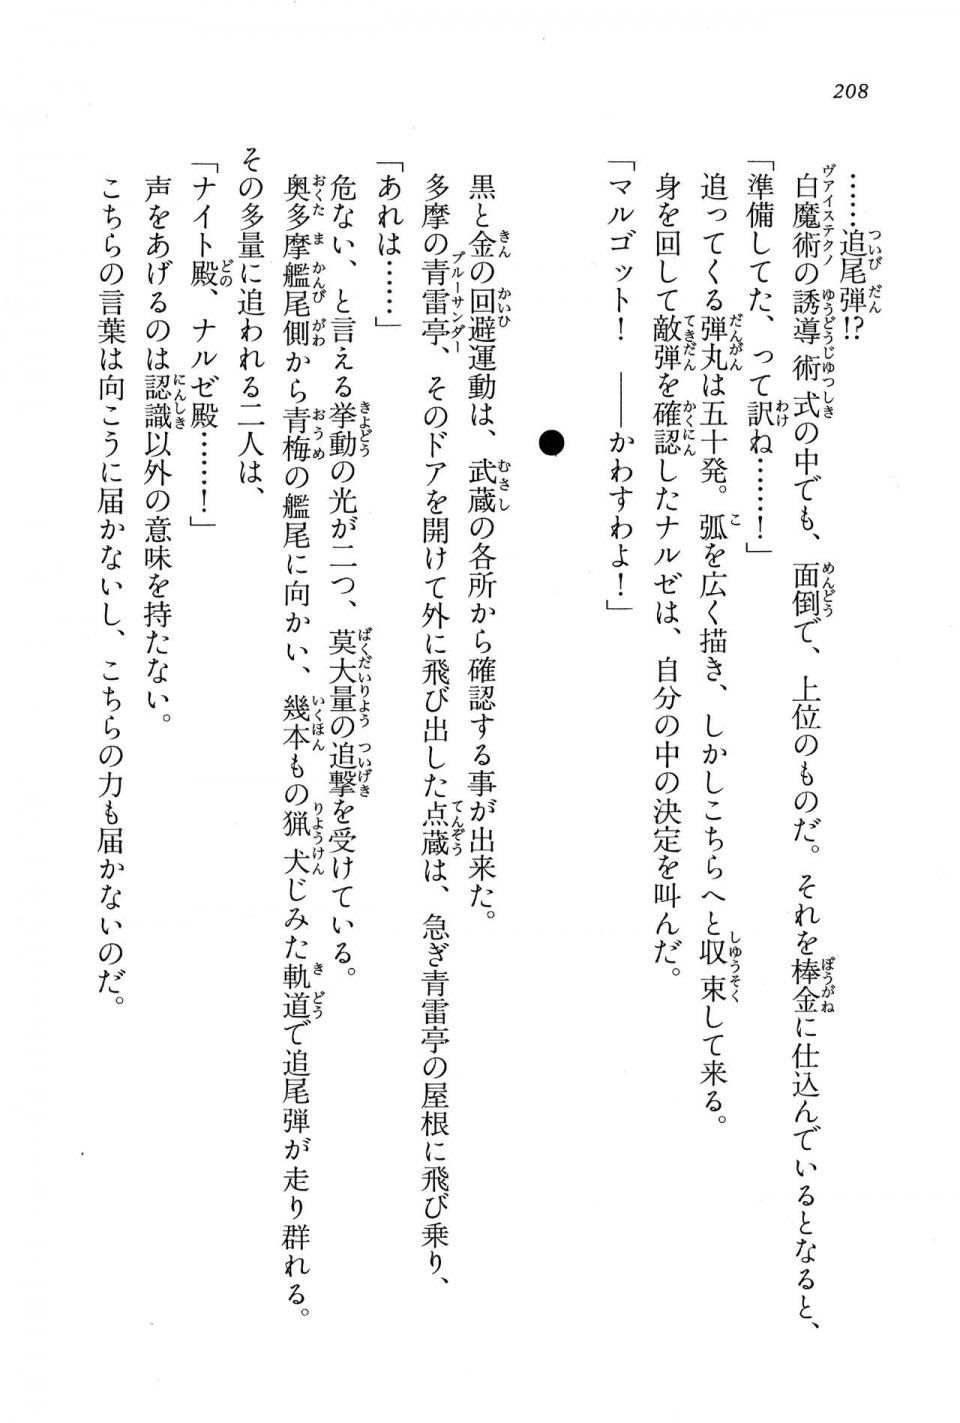 Kyoukai Senjou no Horizon BD Special Mininovel Vol 7(4A) - Photo #212